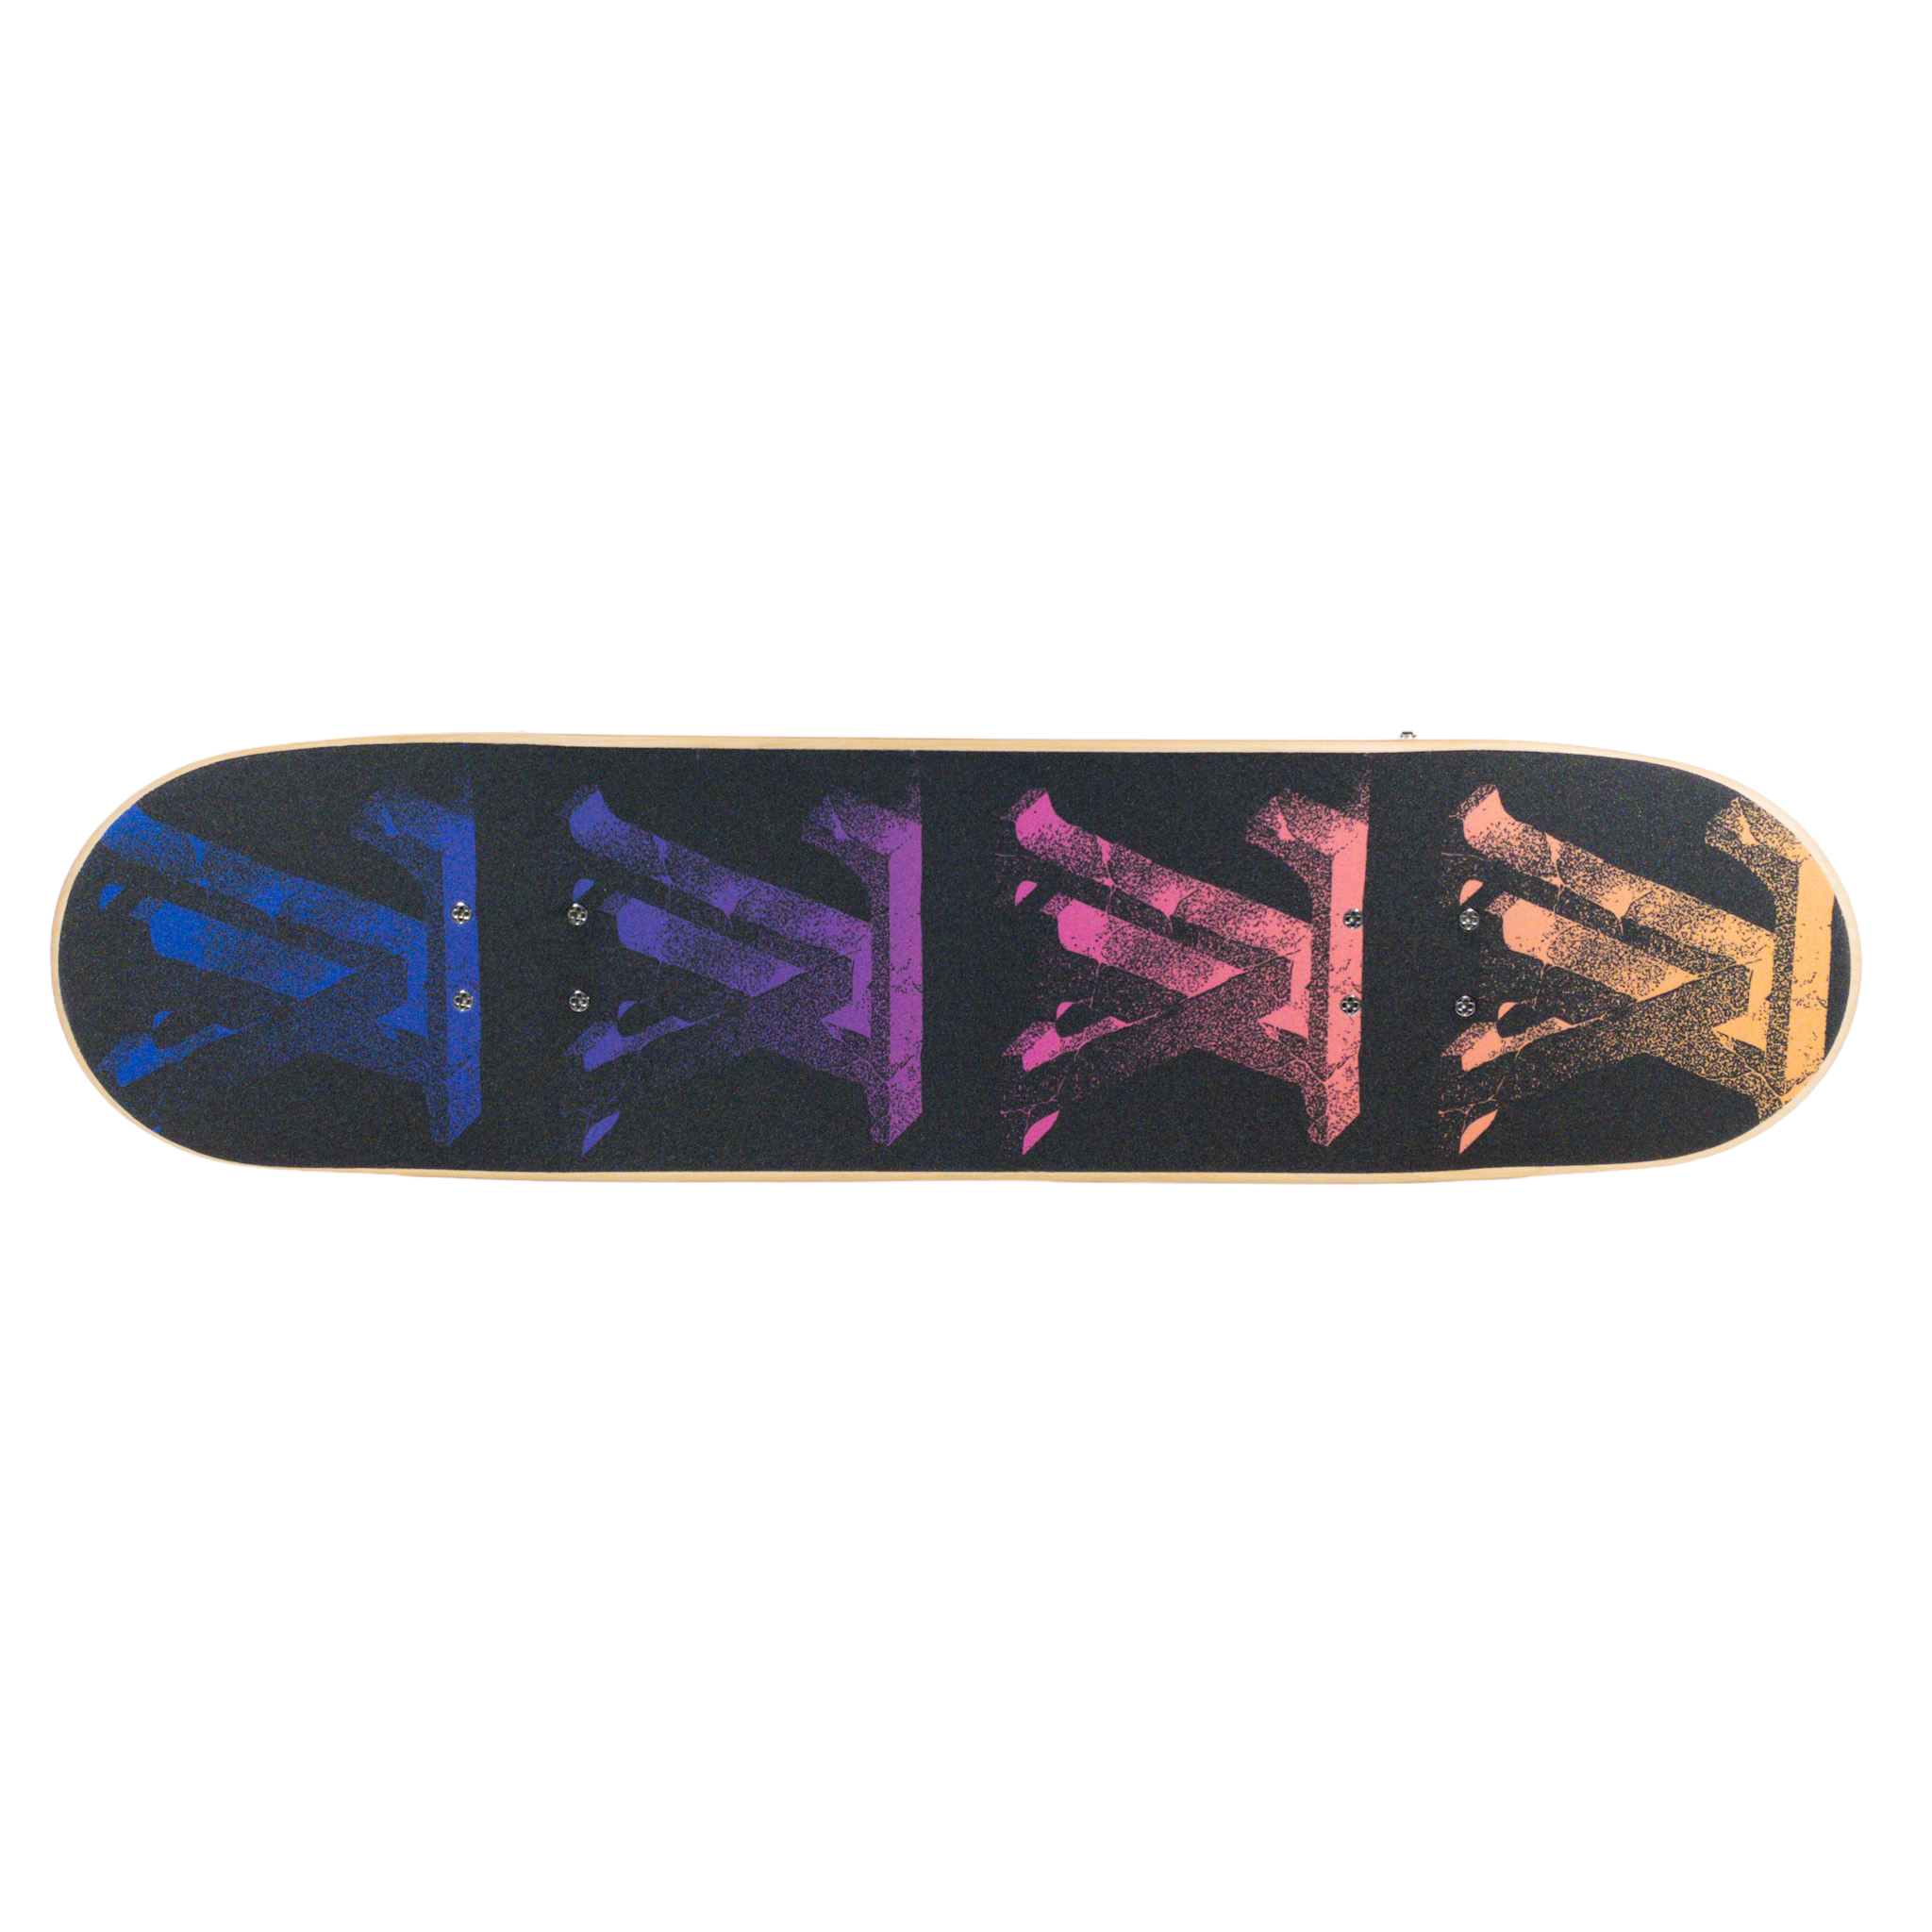 vuitton skate board